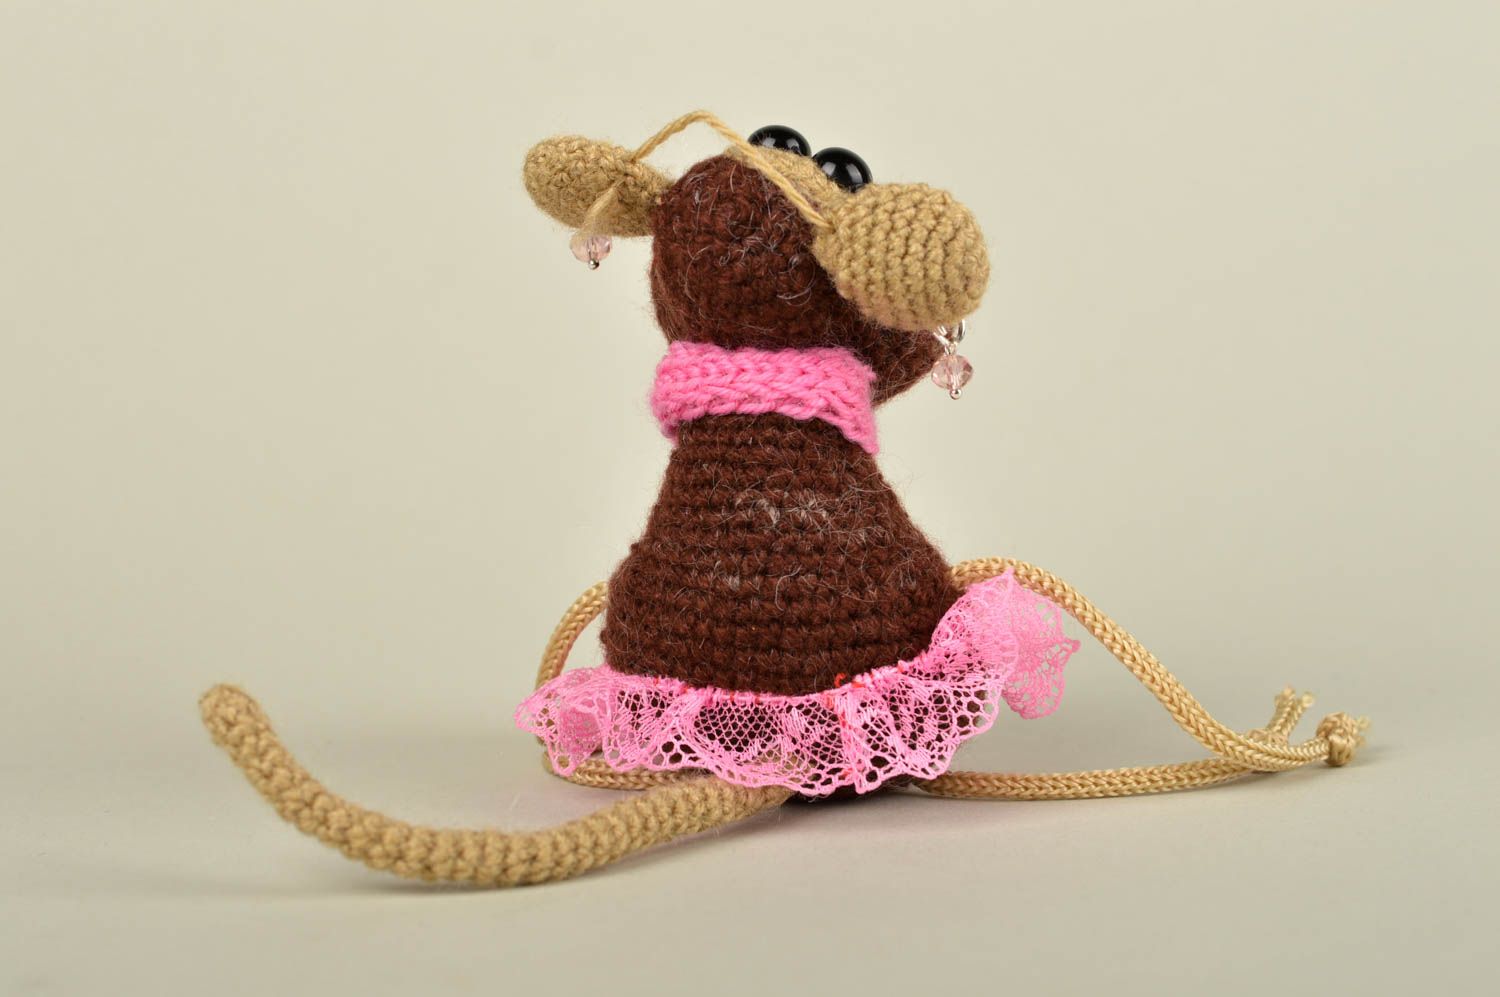 Hand-crocheted creative toy handmade stylish toy for babies nursery decor photo 4